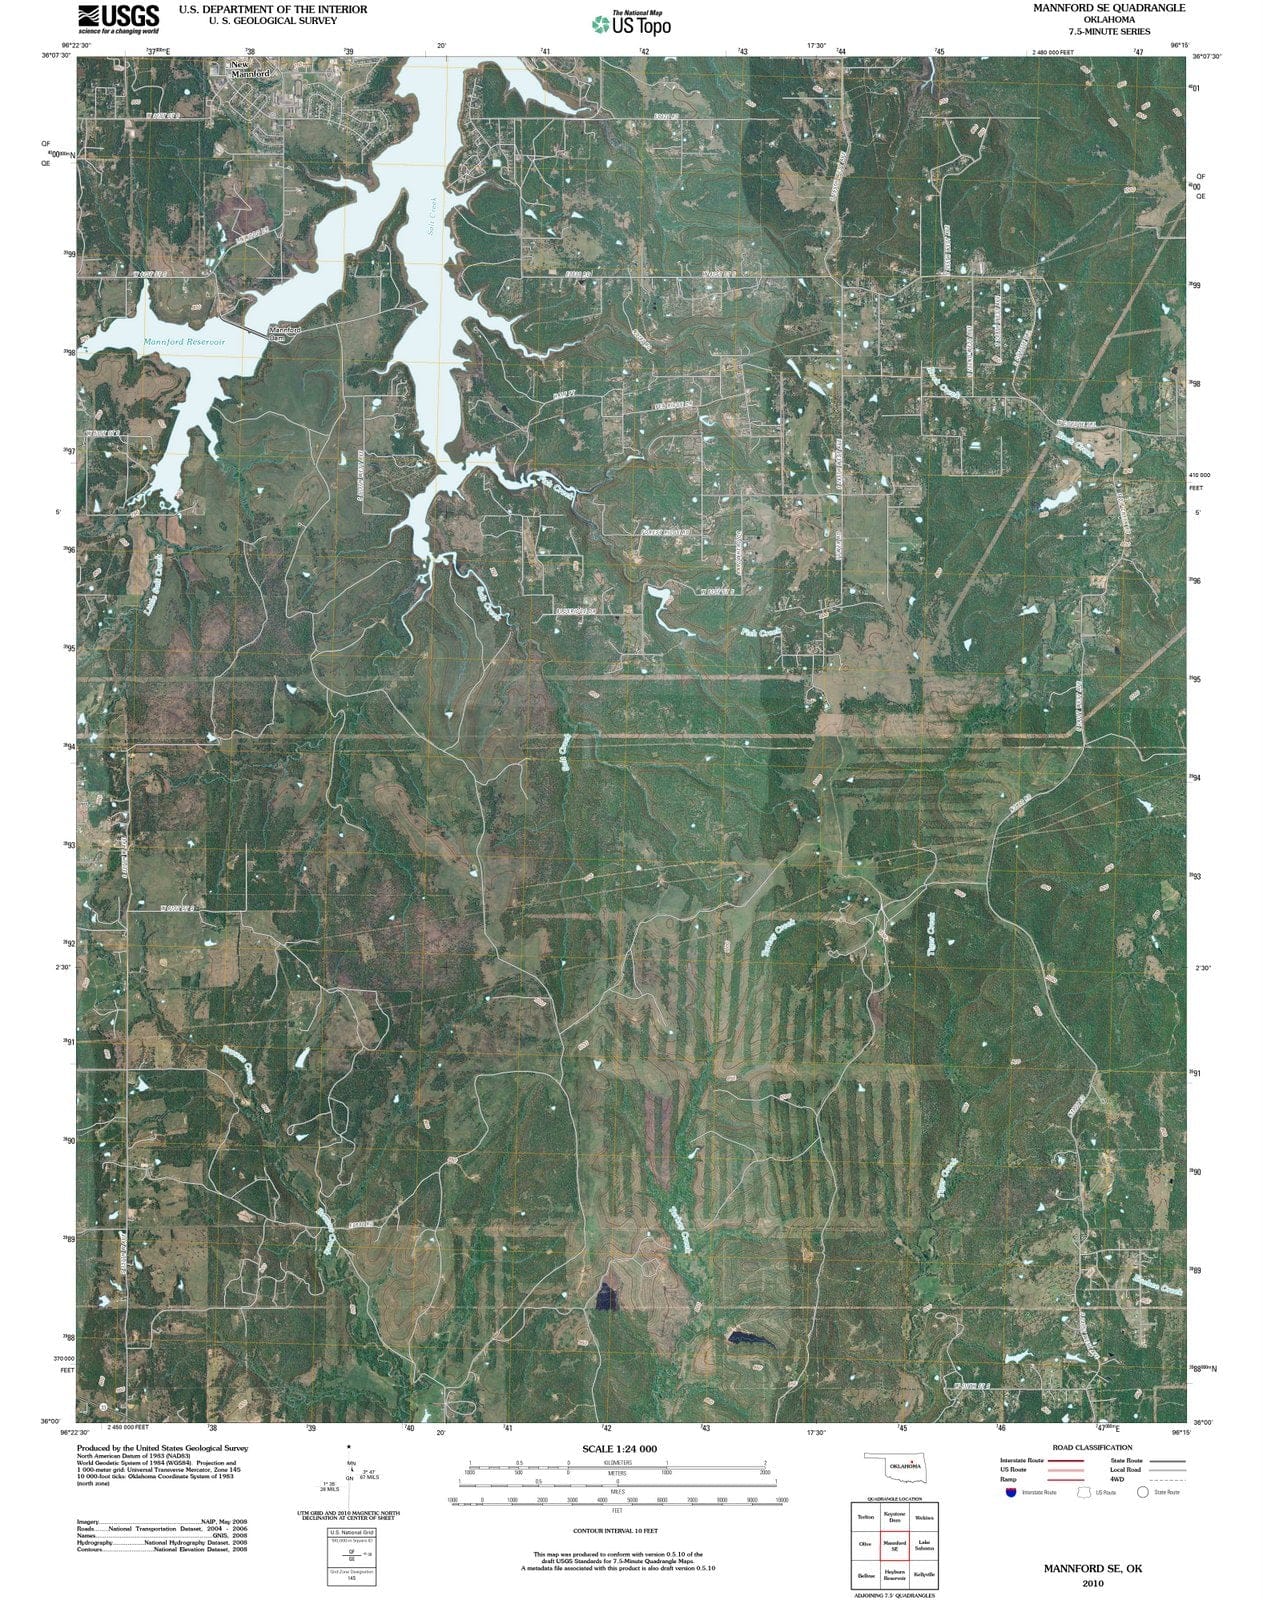 2010 Mannford, OK - Oklahoma - USGS Topographic Map